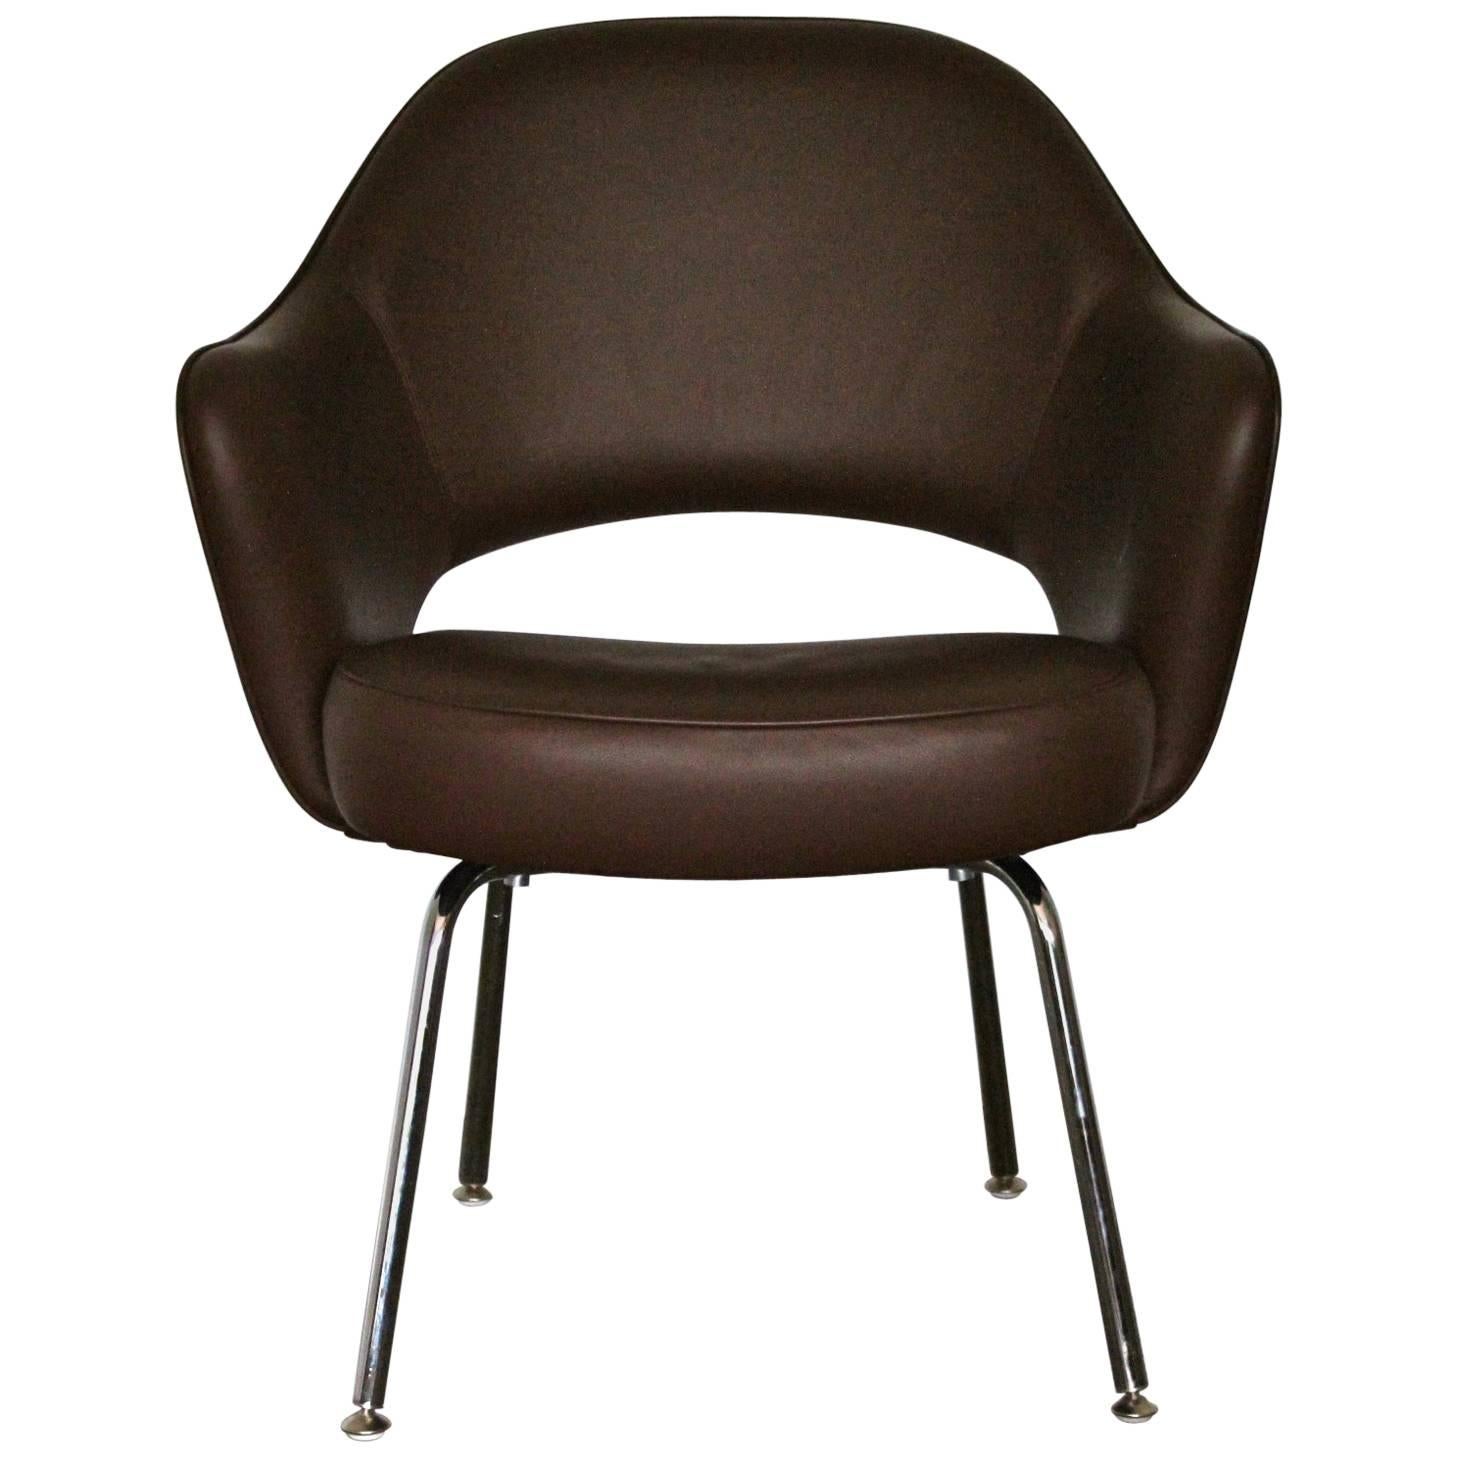 Knoll Studio “Saarinen Executive” Armchair in “Volo” Brown Leather